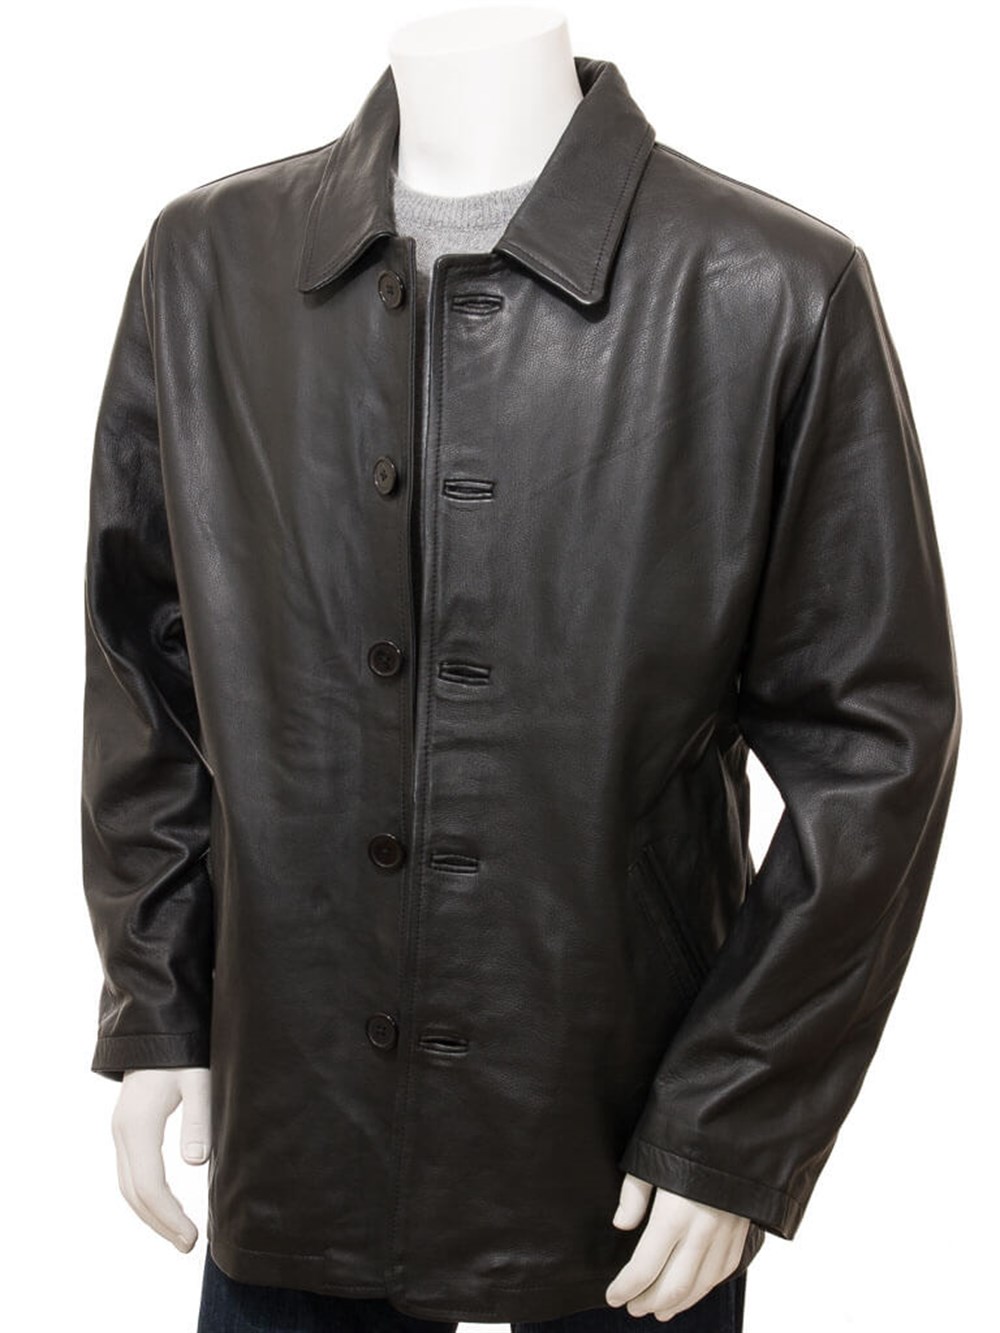 Erkek Siyah Deri Ceket: Fremington | Deri Ceket Modelleri - Dericeket.com.tr